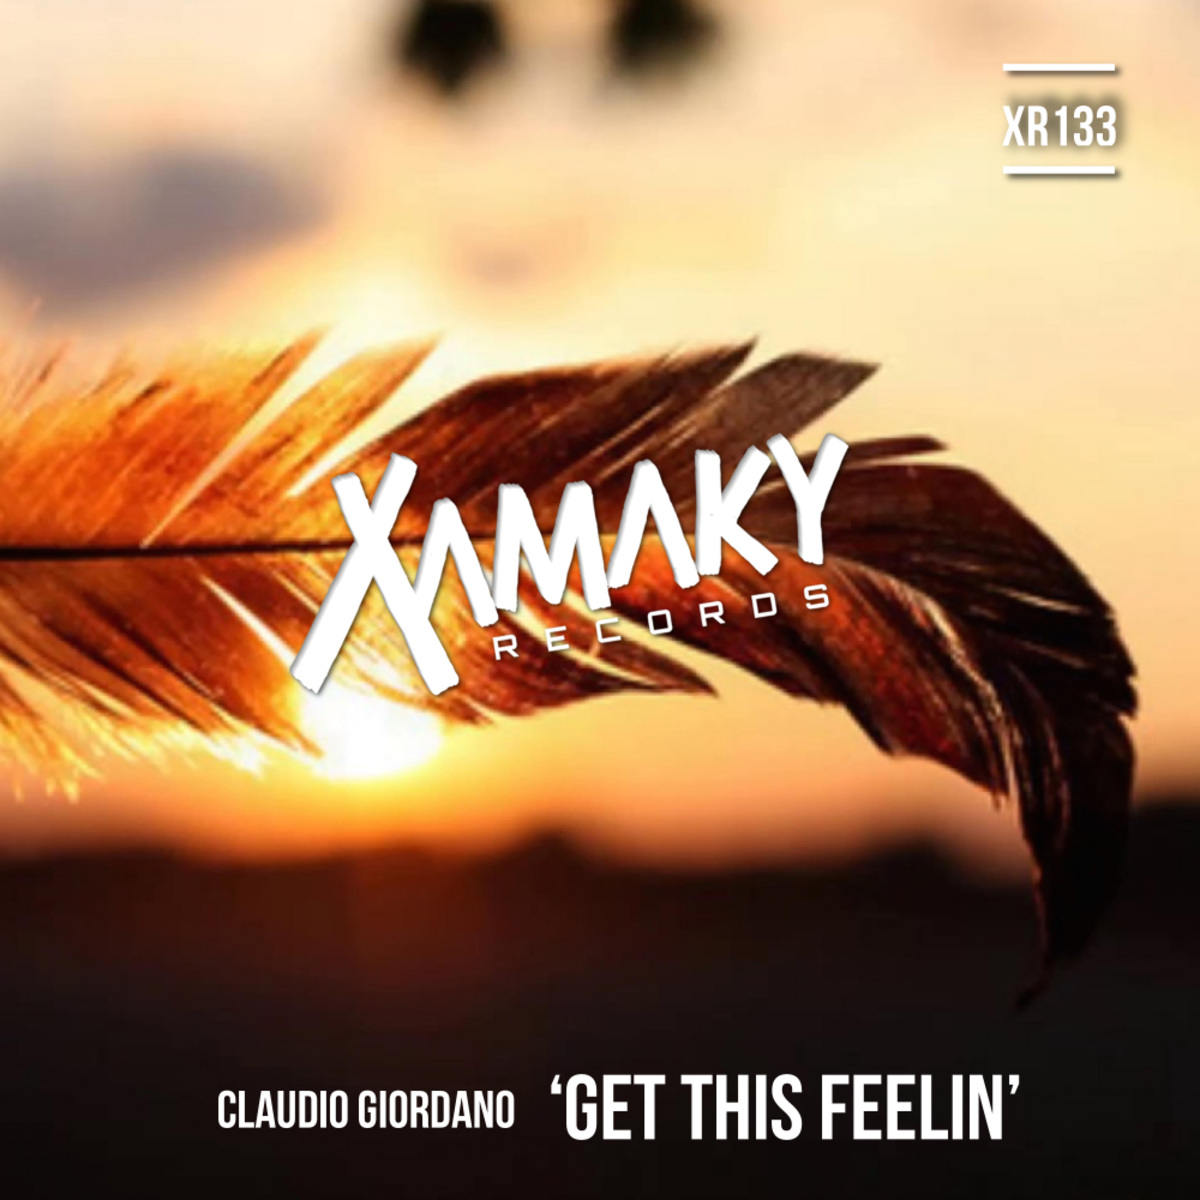 Claudio Giordano - Get This Feelin / Xamaky Records